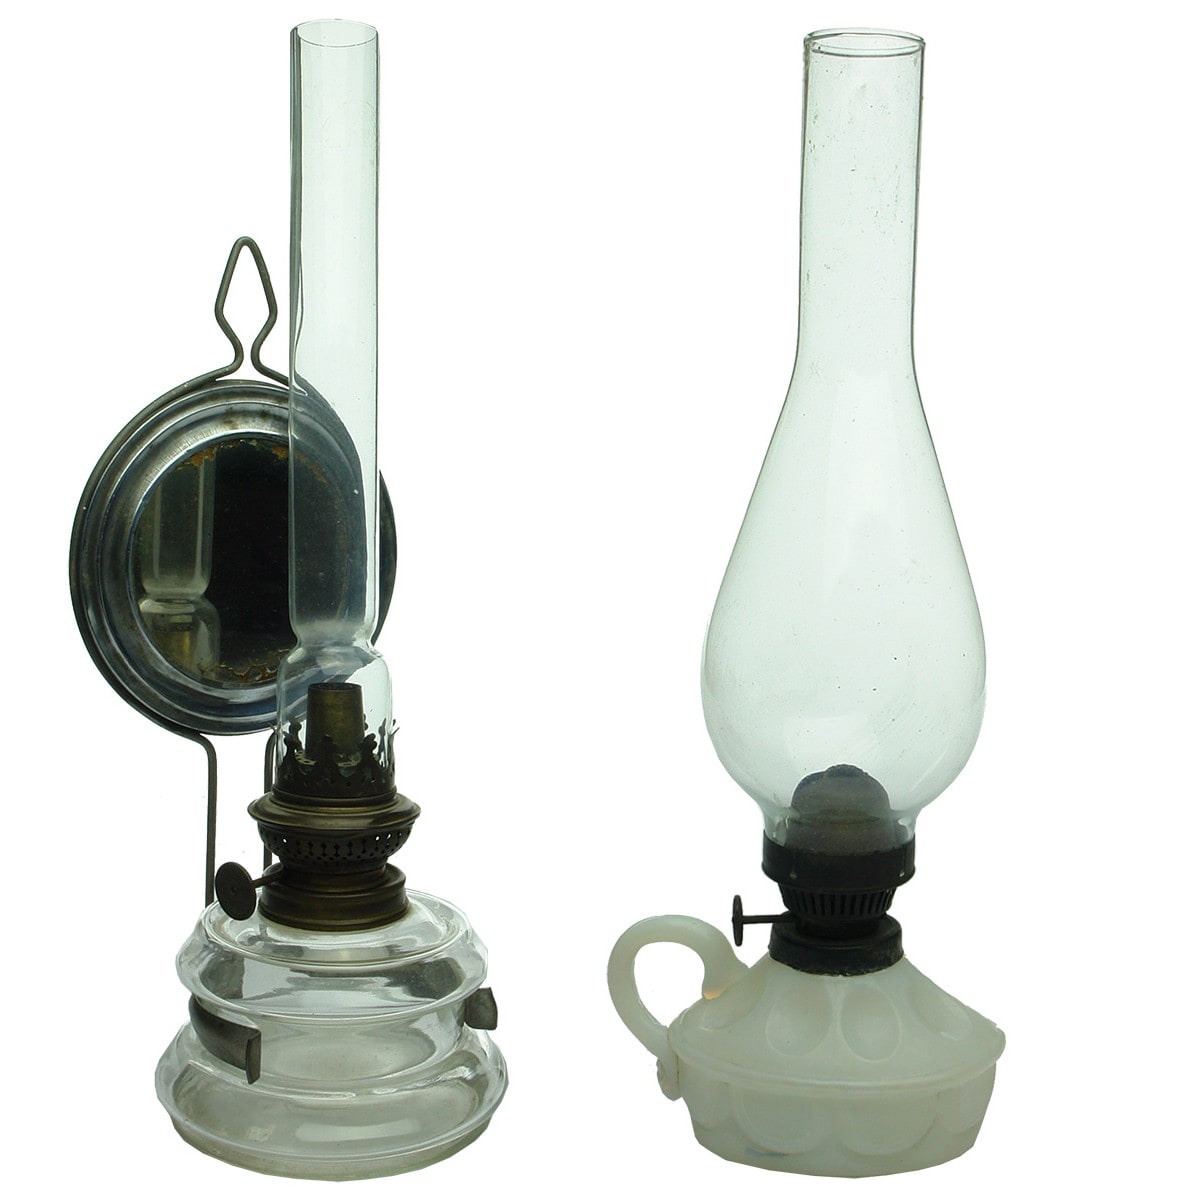 Two Lamps. Kosmos Brenner Kerosene Hanging Lamp with Reflector and Milk glass handled kerosene lamp.